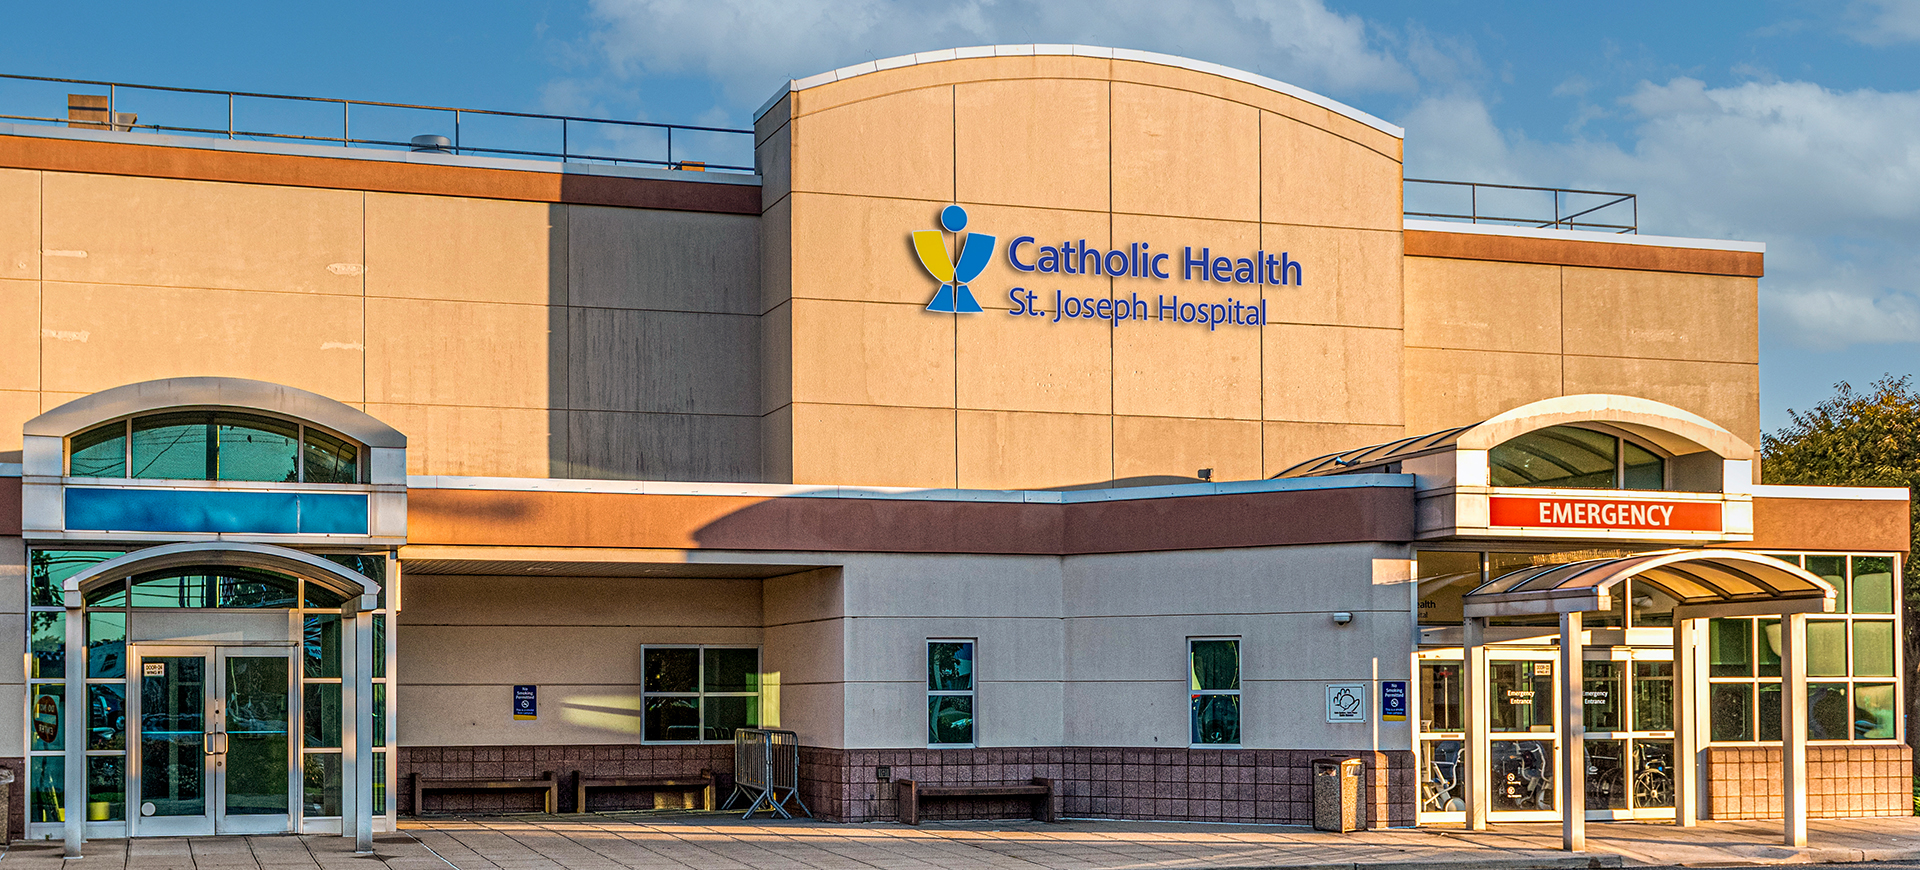       	        
	  	  Center for Hyperbaric Medicine & Wound Healing at St. Joseph Hospital
	  	  
	        